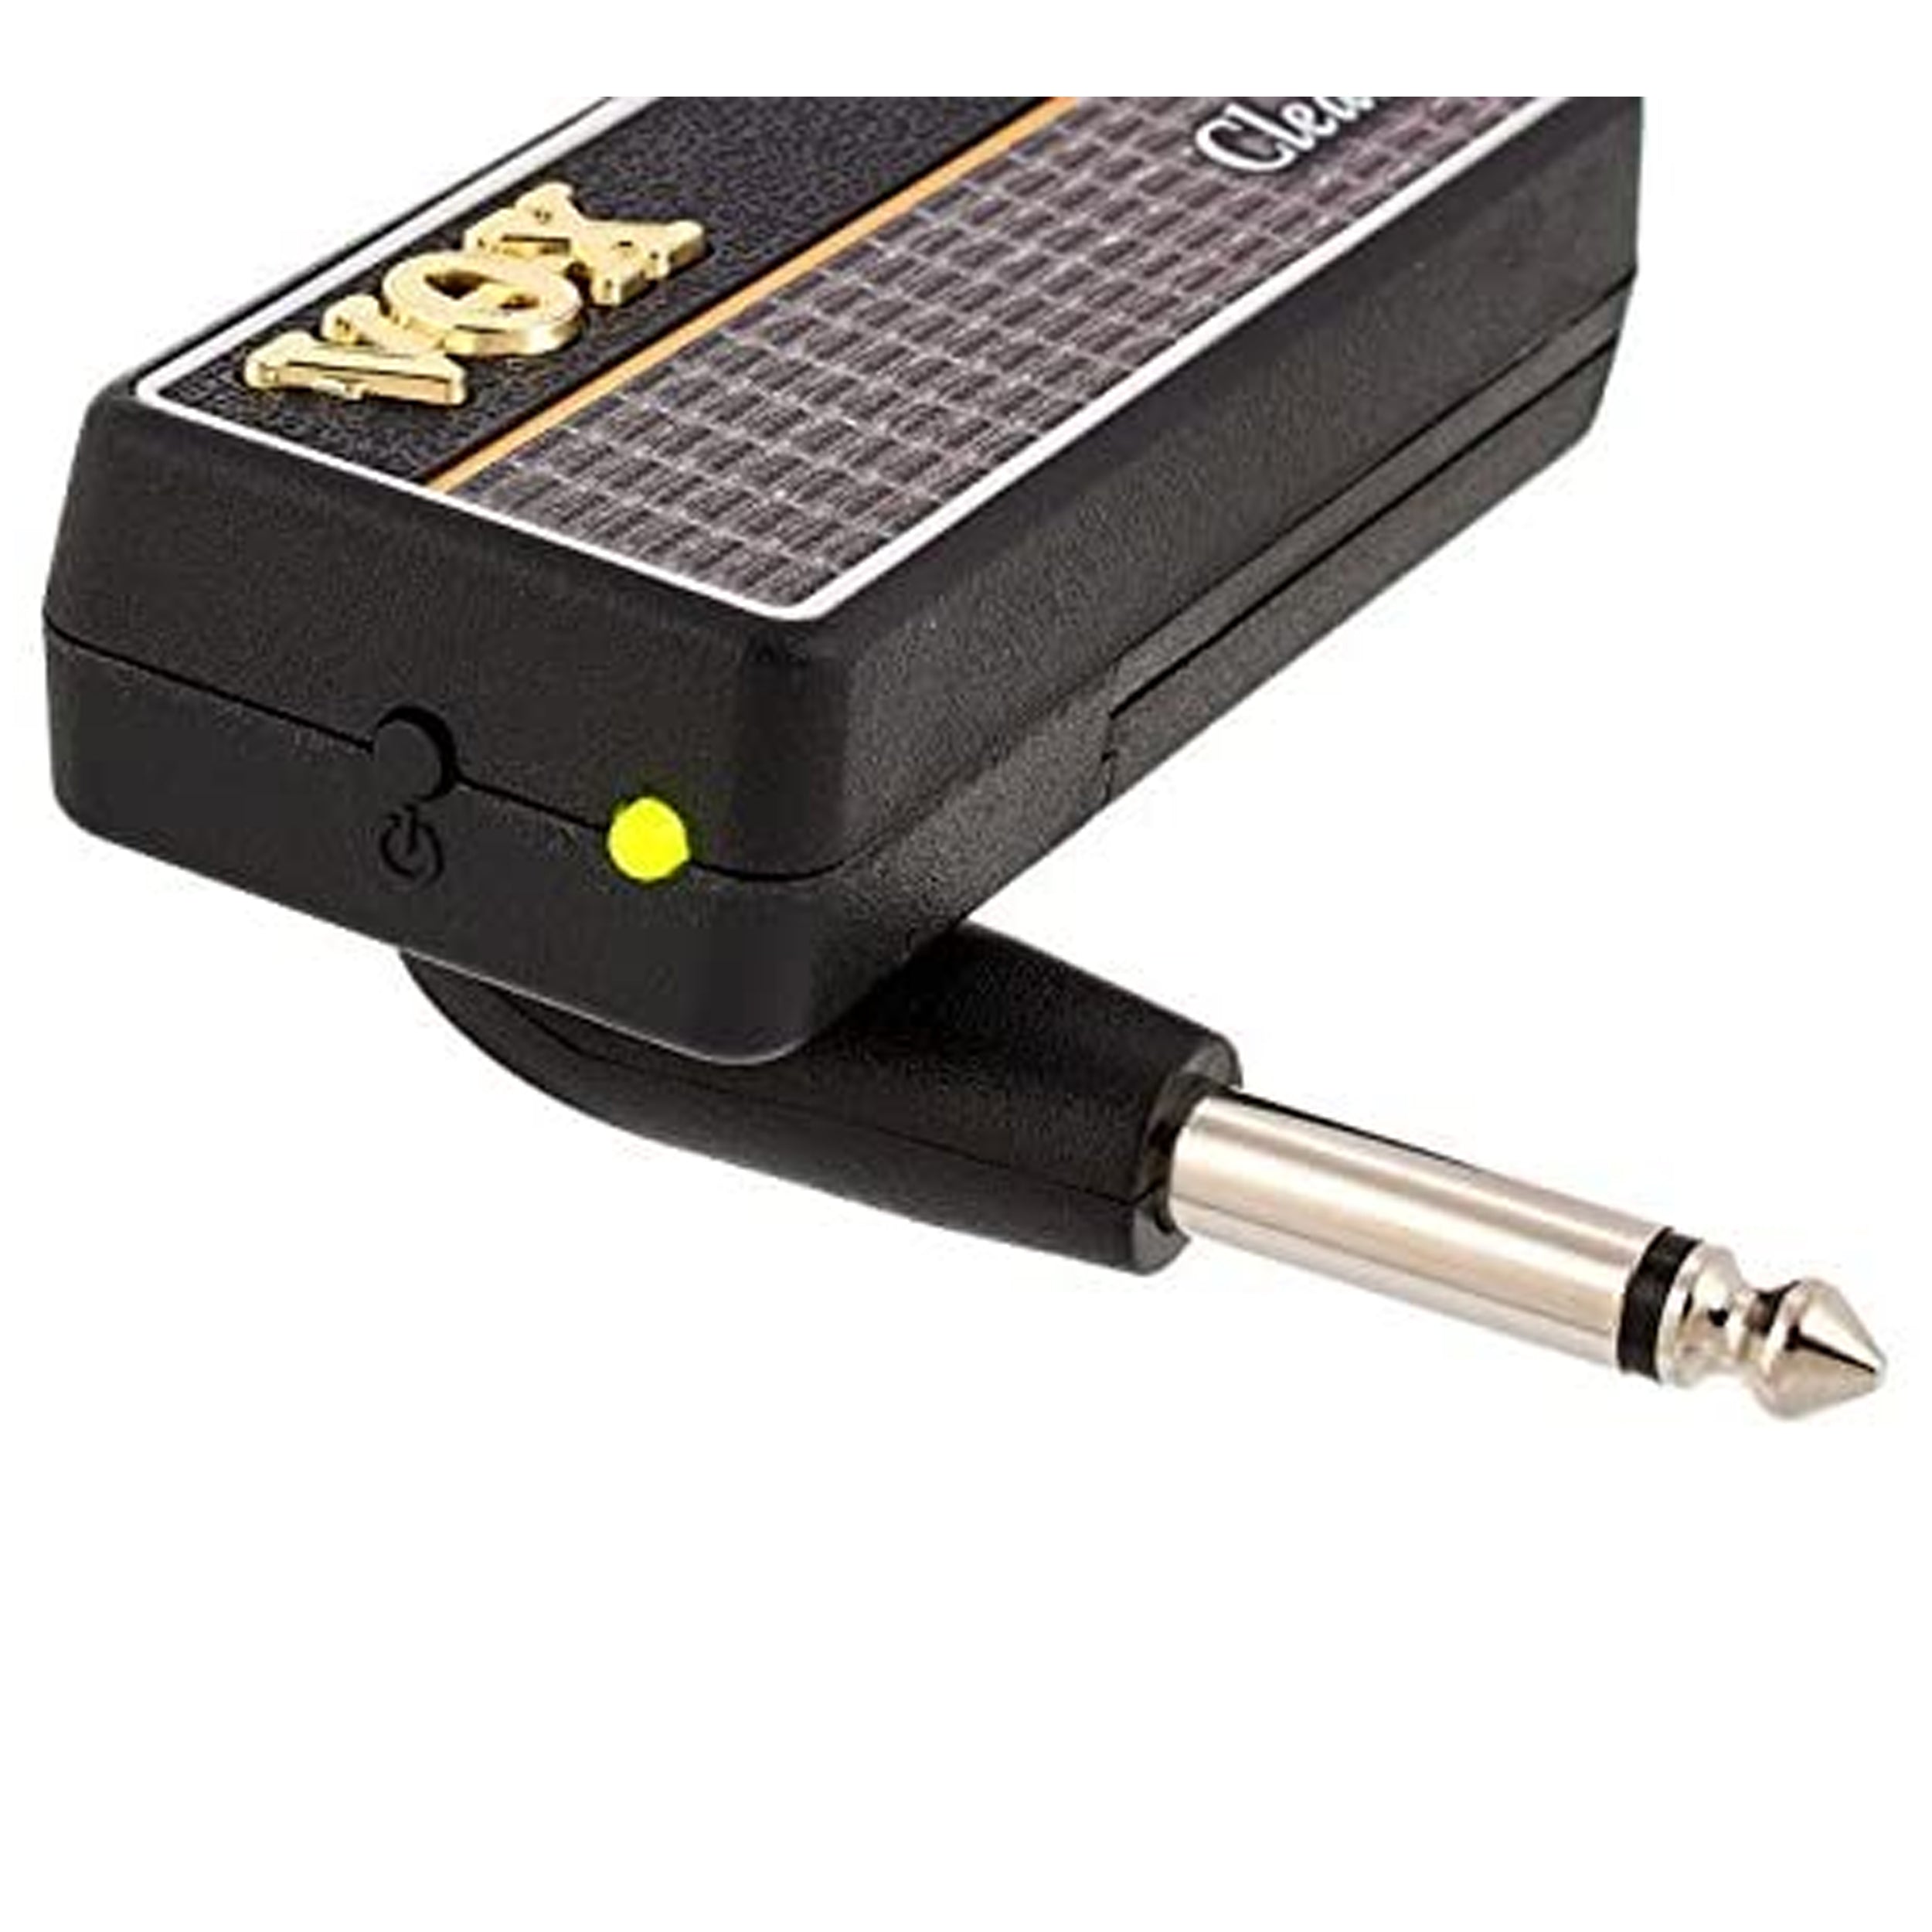 Vox Amplug 2 Clean AP2CL Guitar Headphone Amplifier